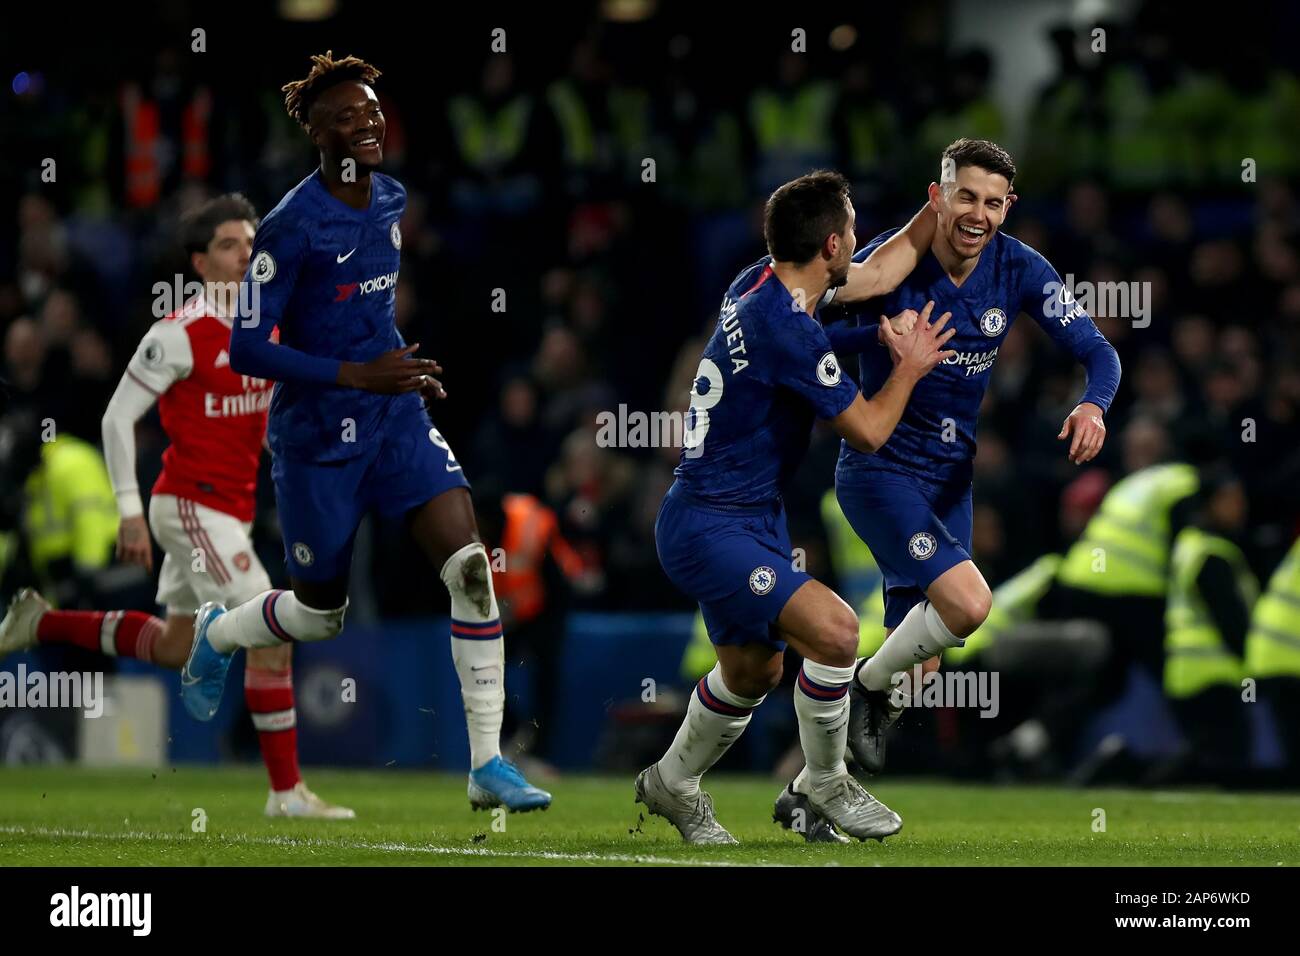 Stamford Bridge, Londres, Unido. ene, 2020. La Liga inglesa de fútbol, Chelsea vs Arsenal; Jorginho de Chelsea como él anota el punto penal para el 1-0 en el